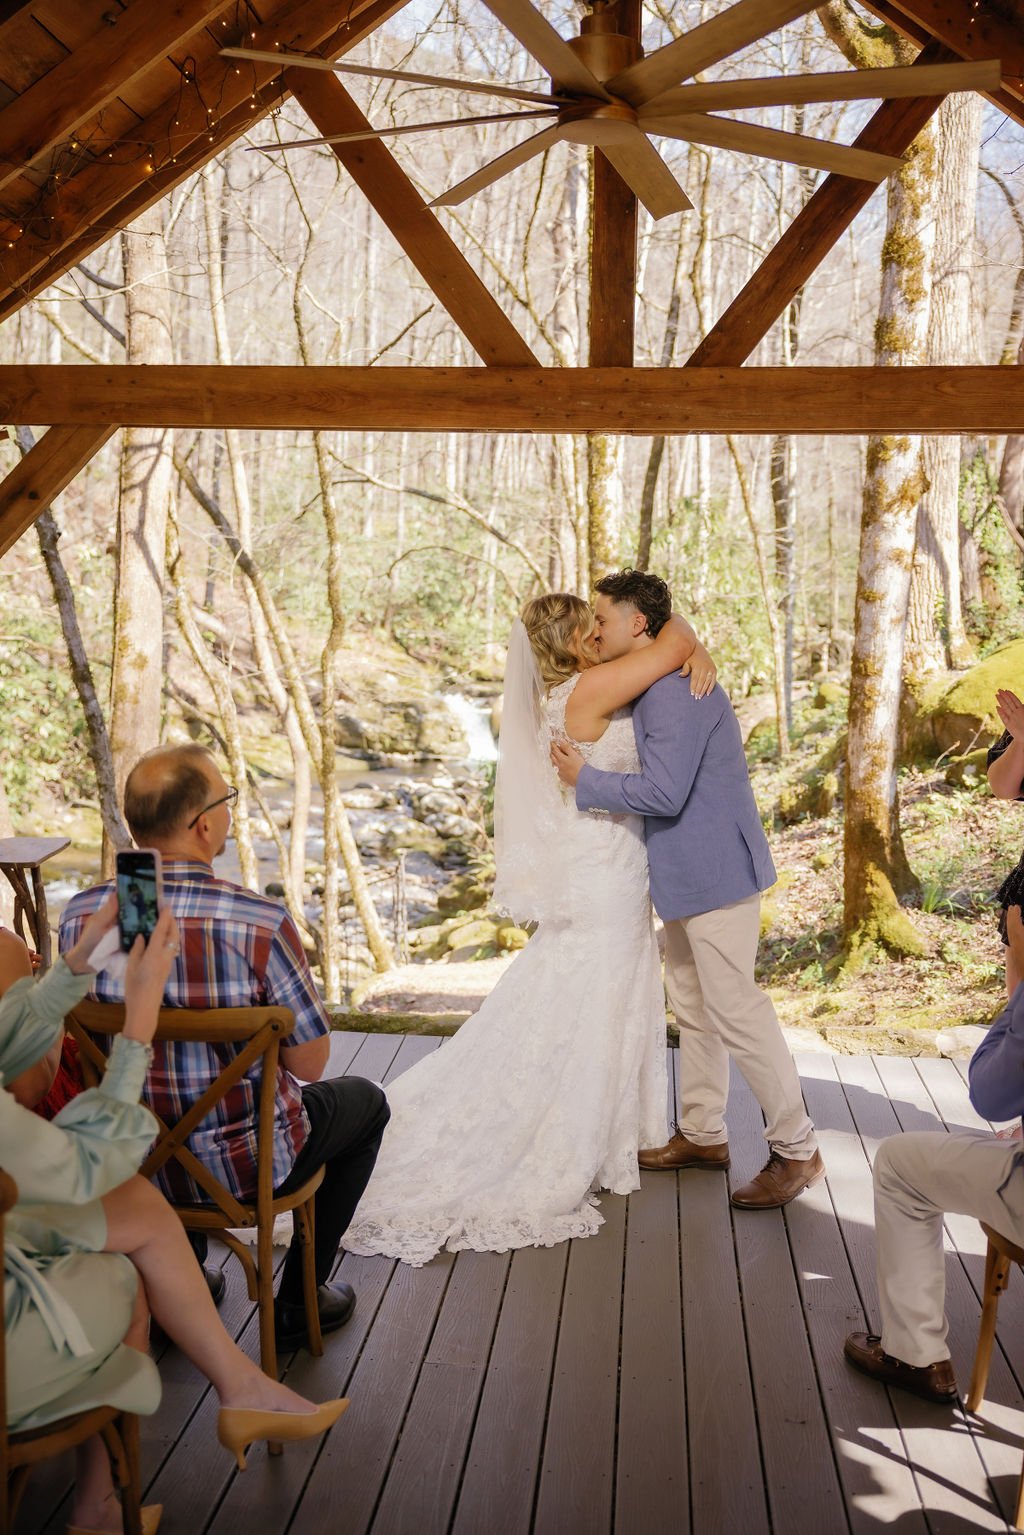 gatlinburg-photographer-tips-for-a-romantic-gatlinburg-elopement-ceremony-couple-kiss-at-ceremony